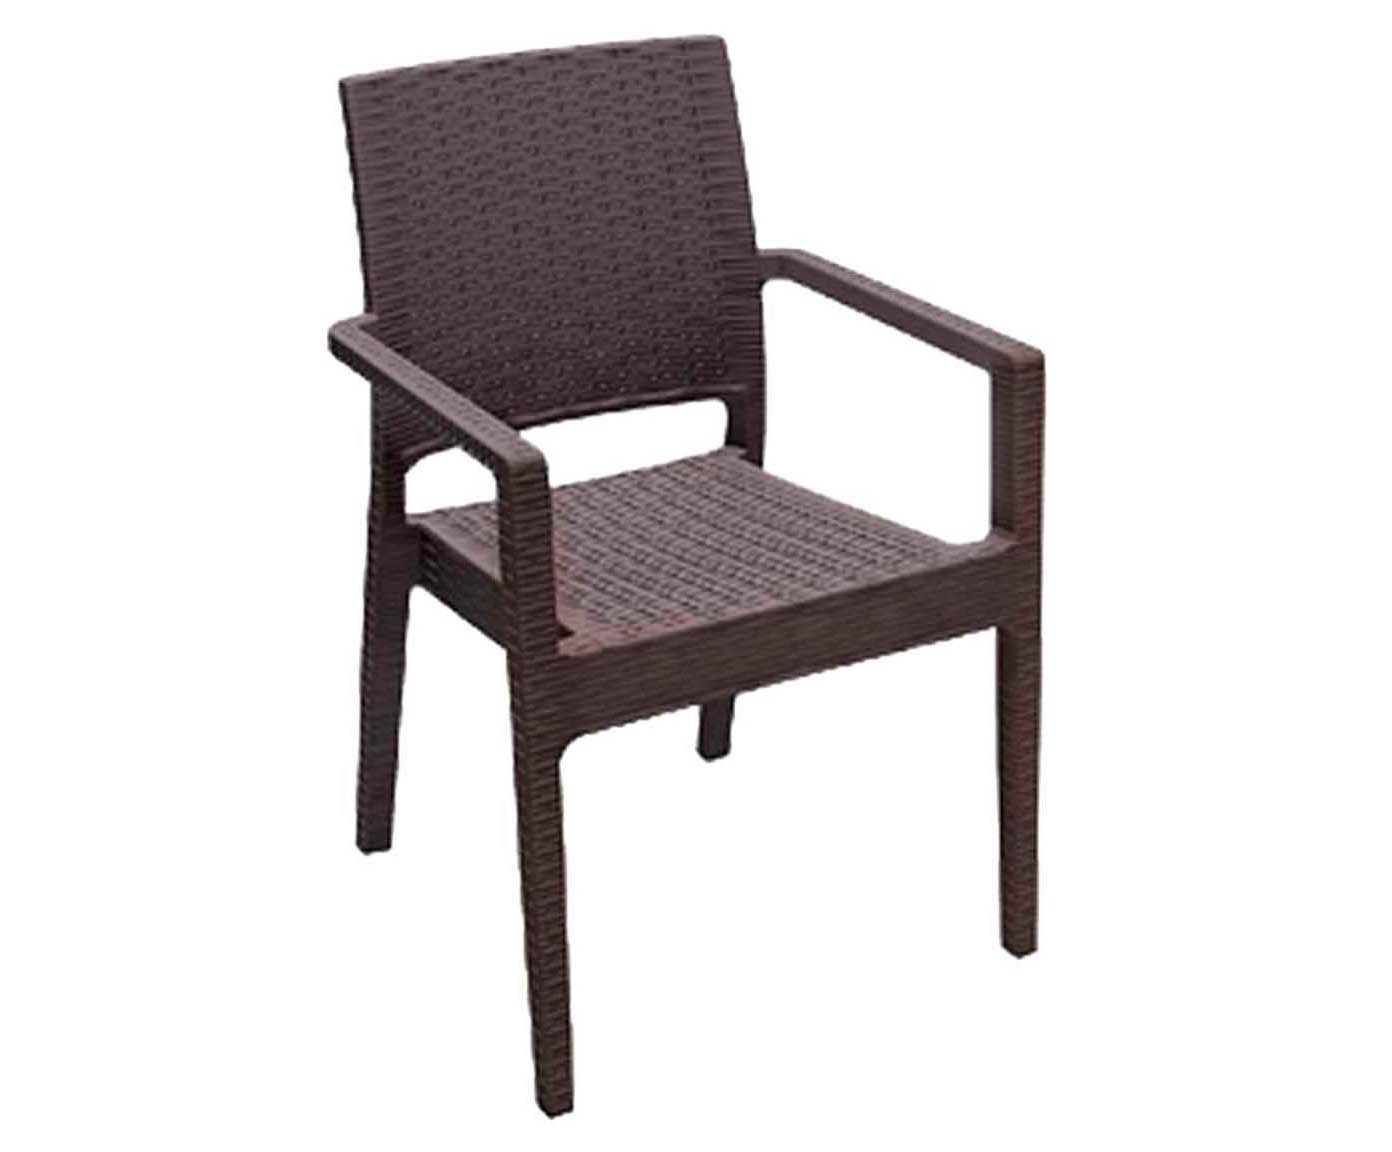 Cadeira braided | Westwing.com.br